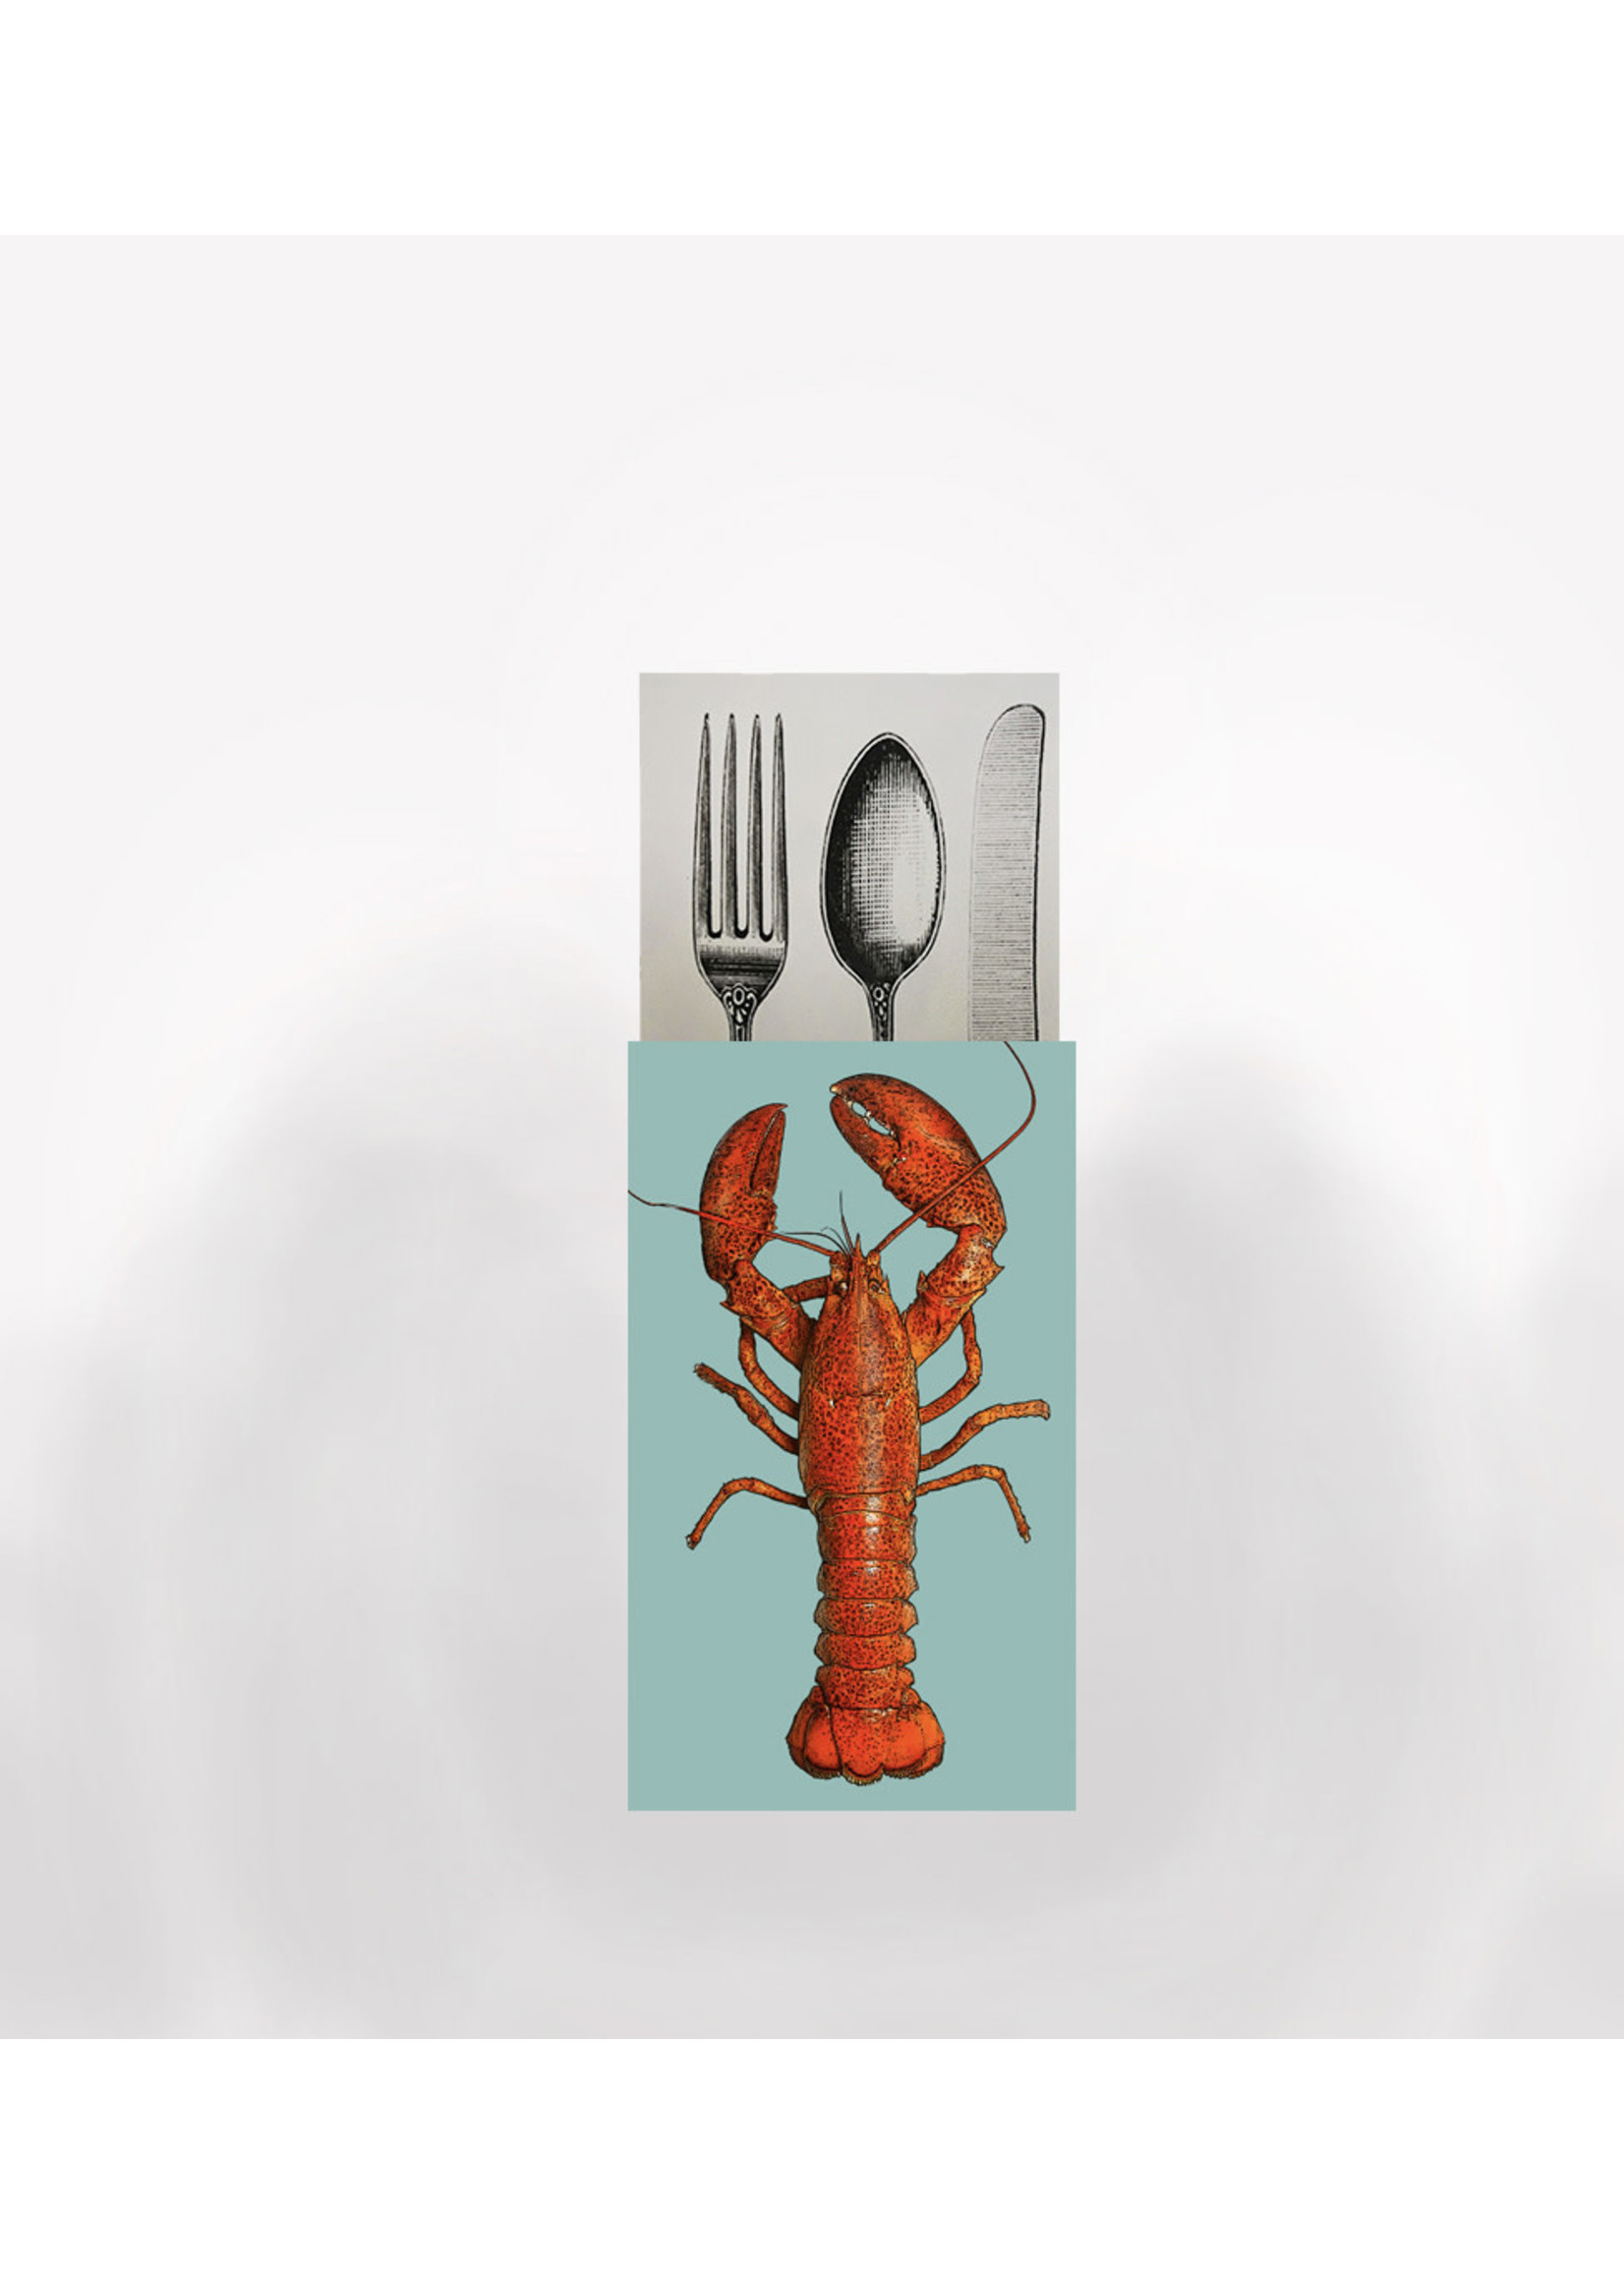 https://cdn.shoplightspeed.com/shops/653935/files/41074195/1652x2313x2/alphie-and-ollie-lobster-and-crab-lobster-utensil.jpg